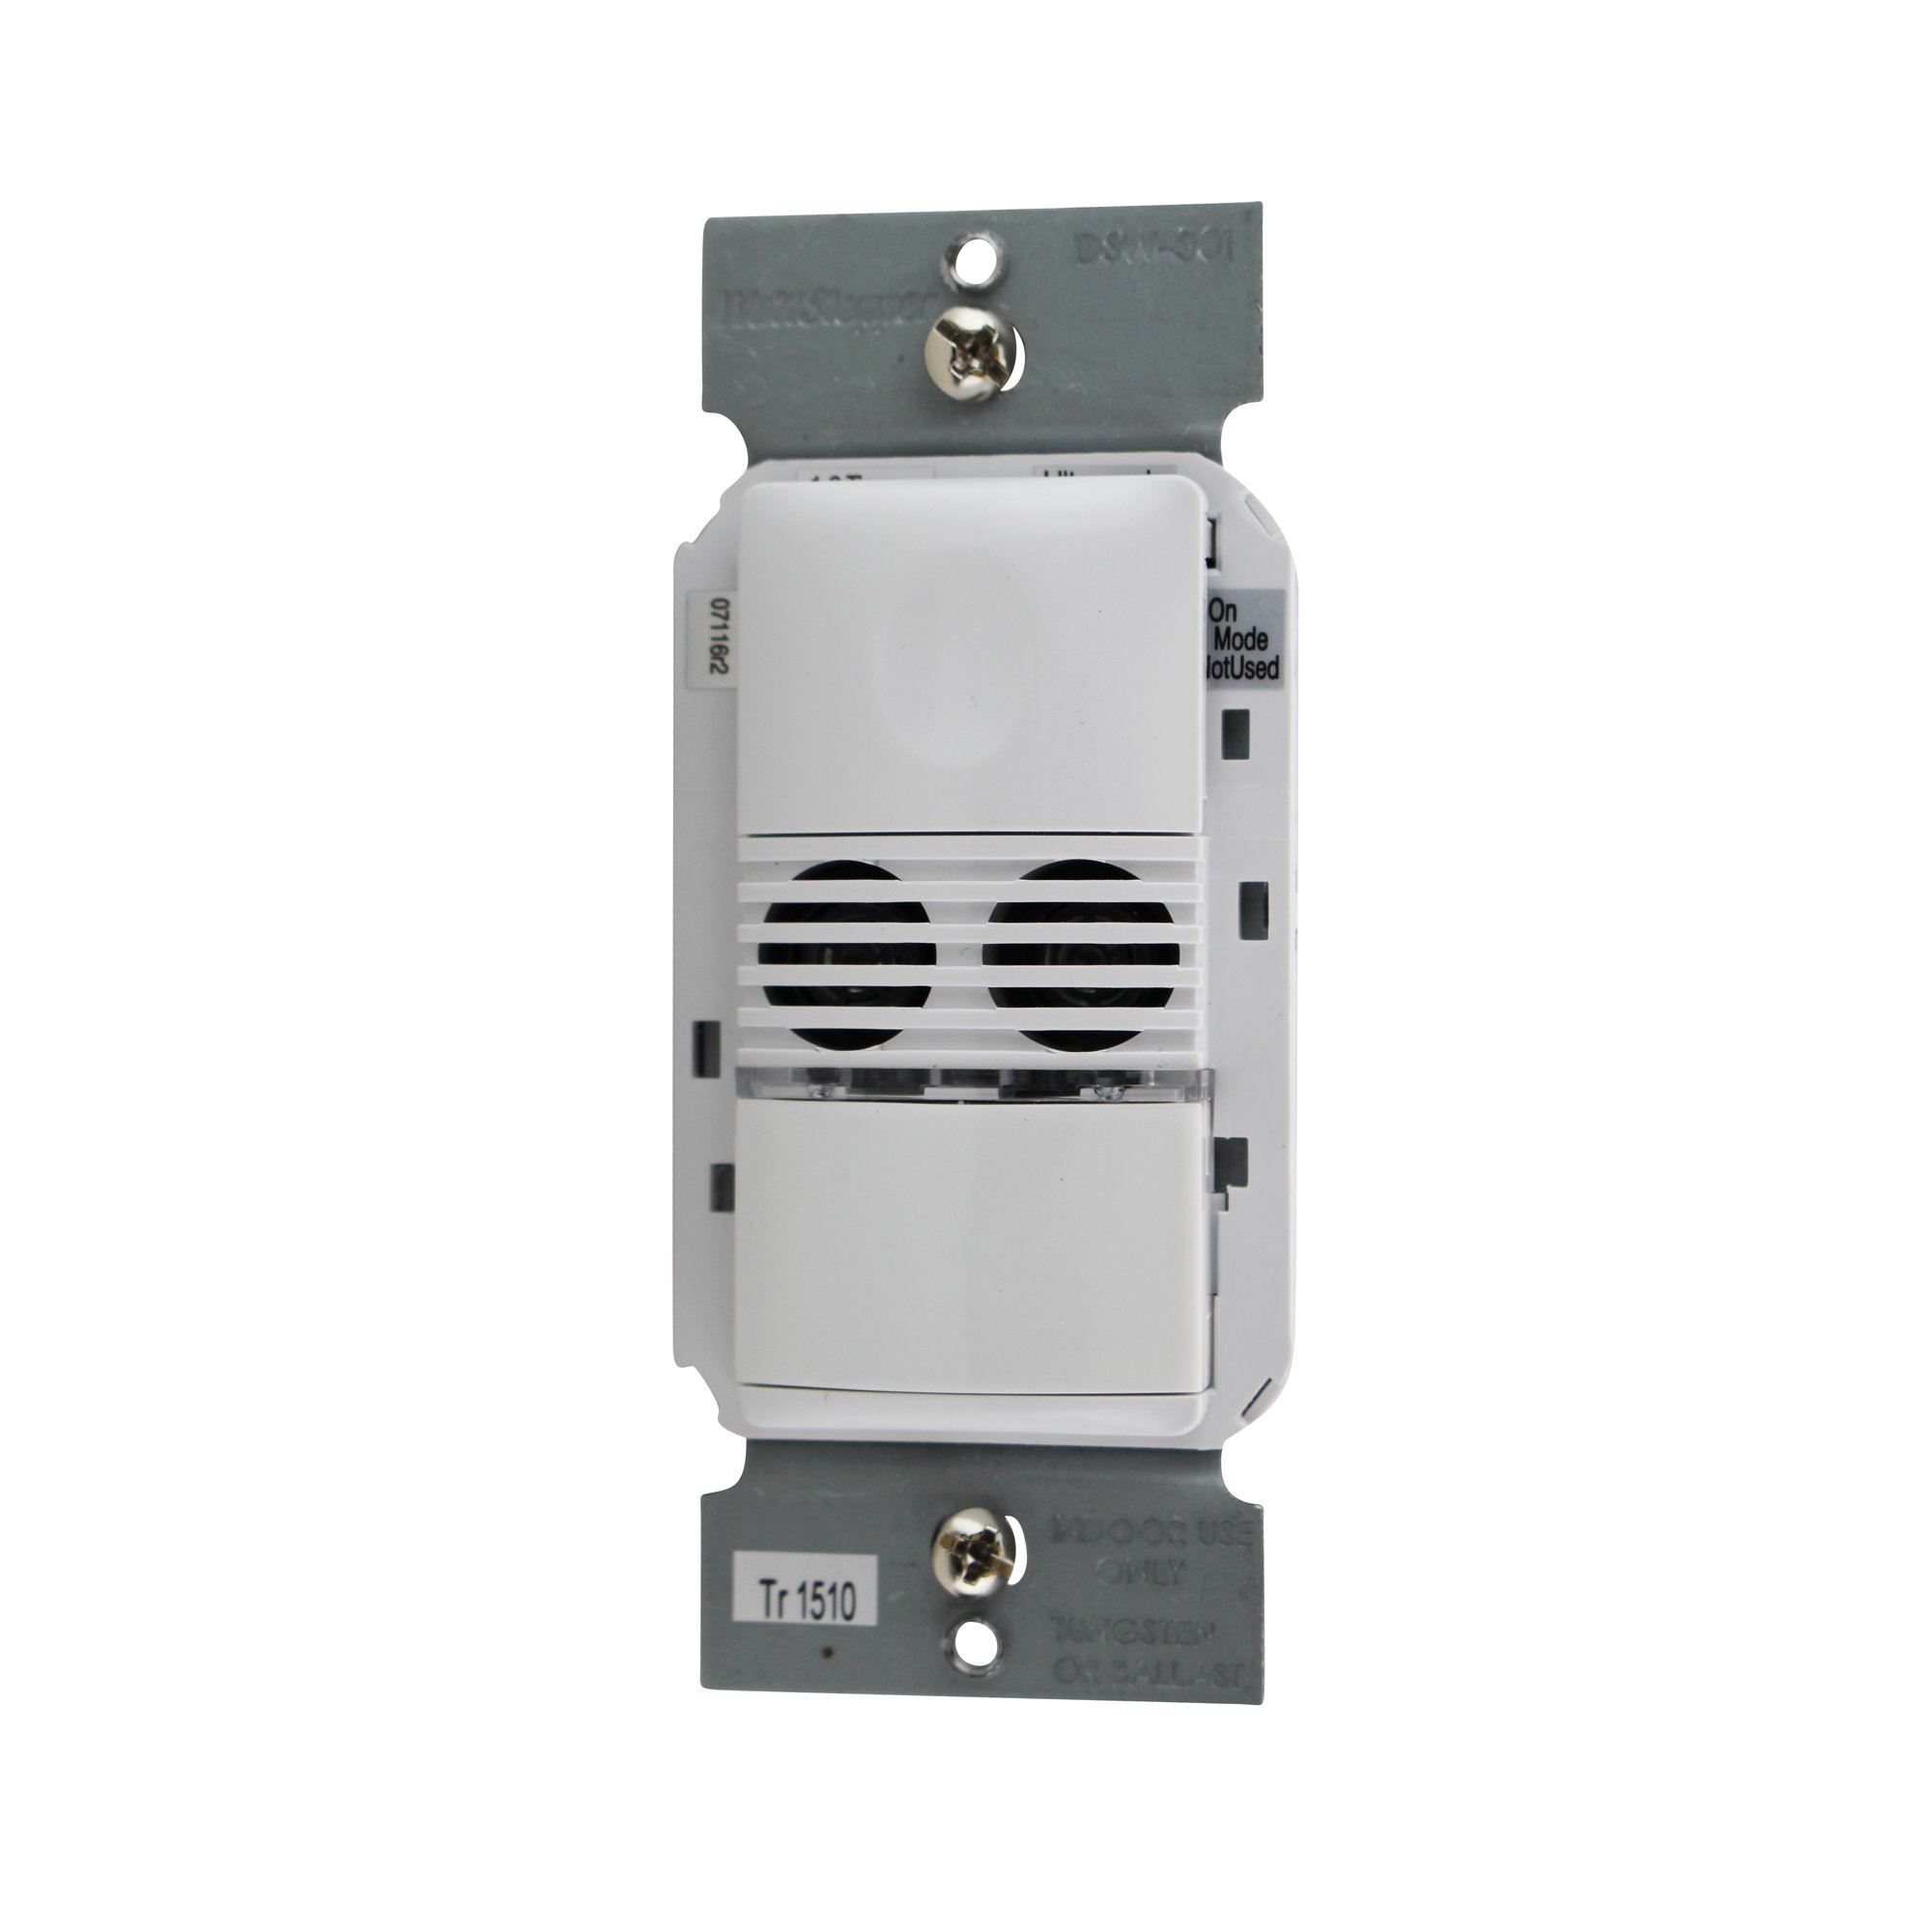 DSW-301/301-347/302/302-347 Dual Technology Wall Switch Occupancy Sensors (TriLingual)